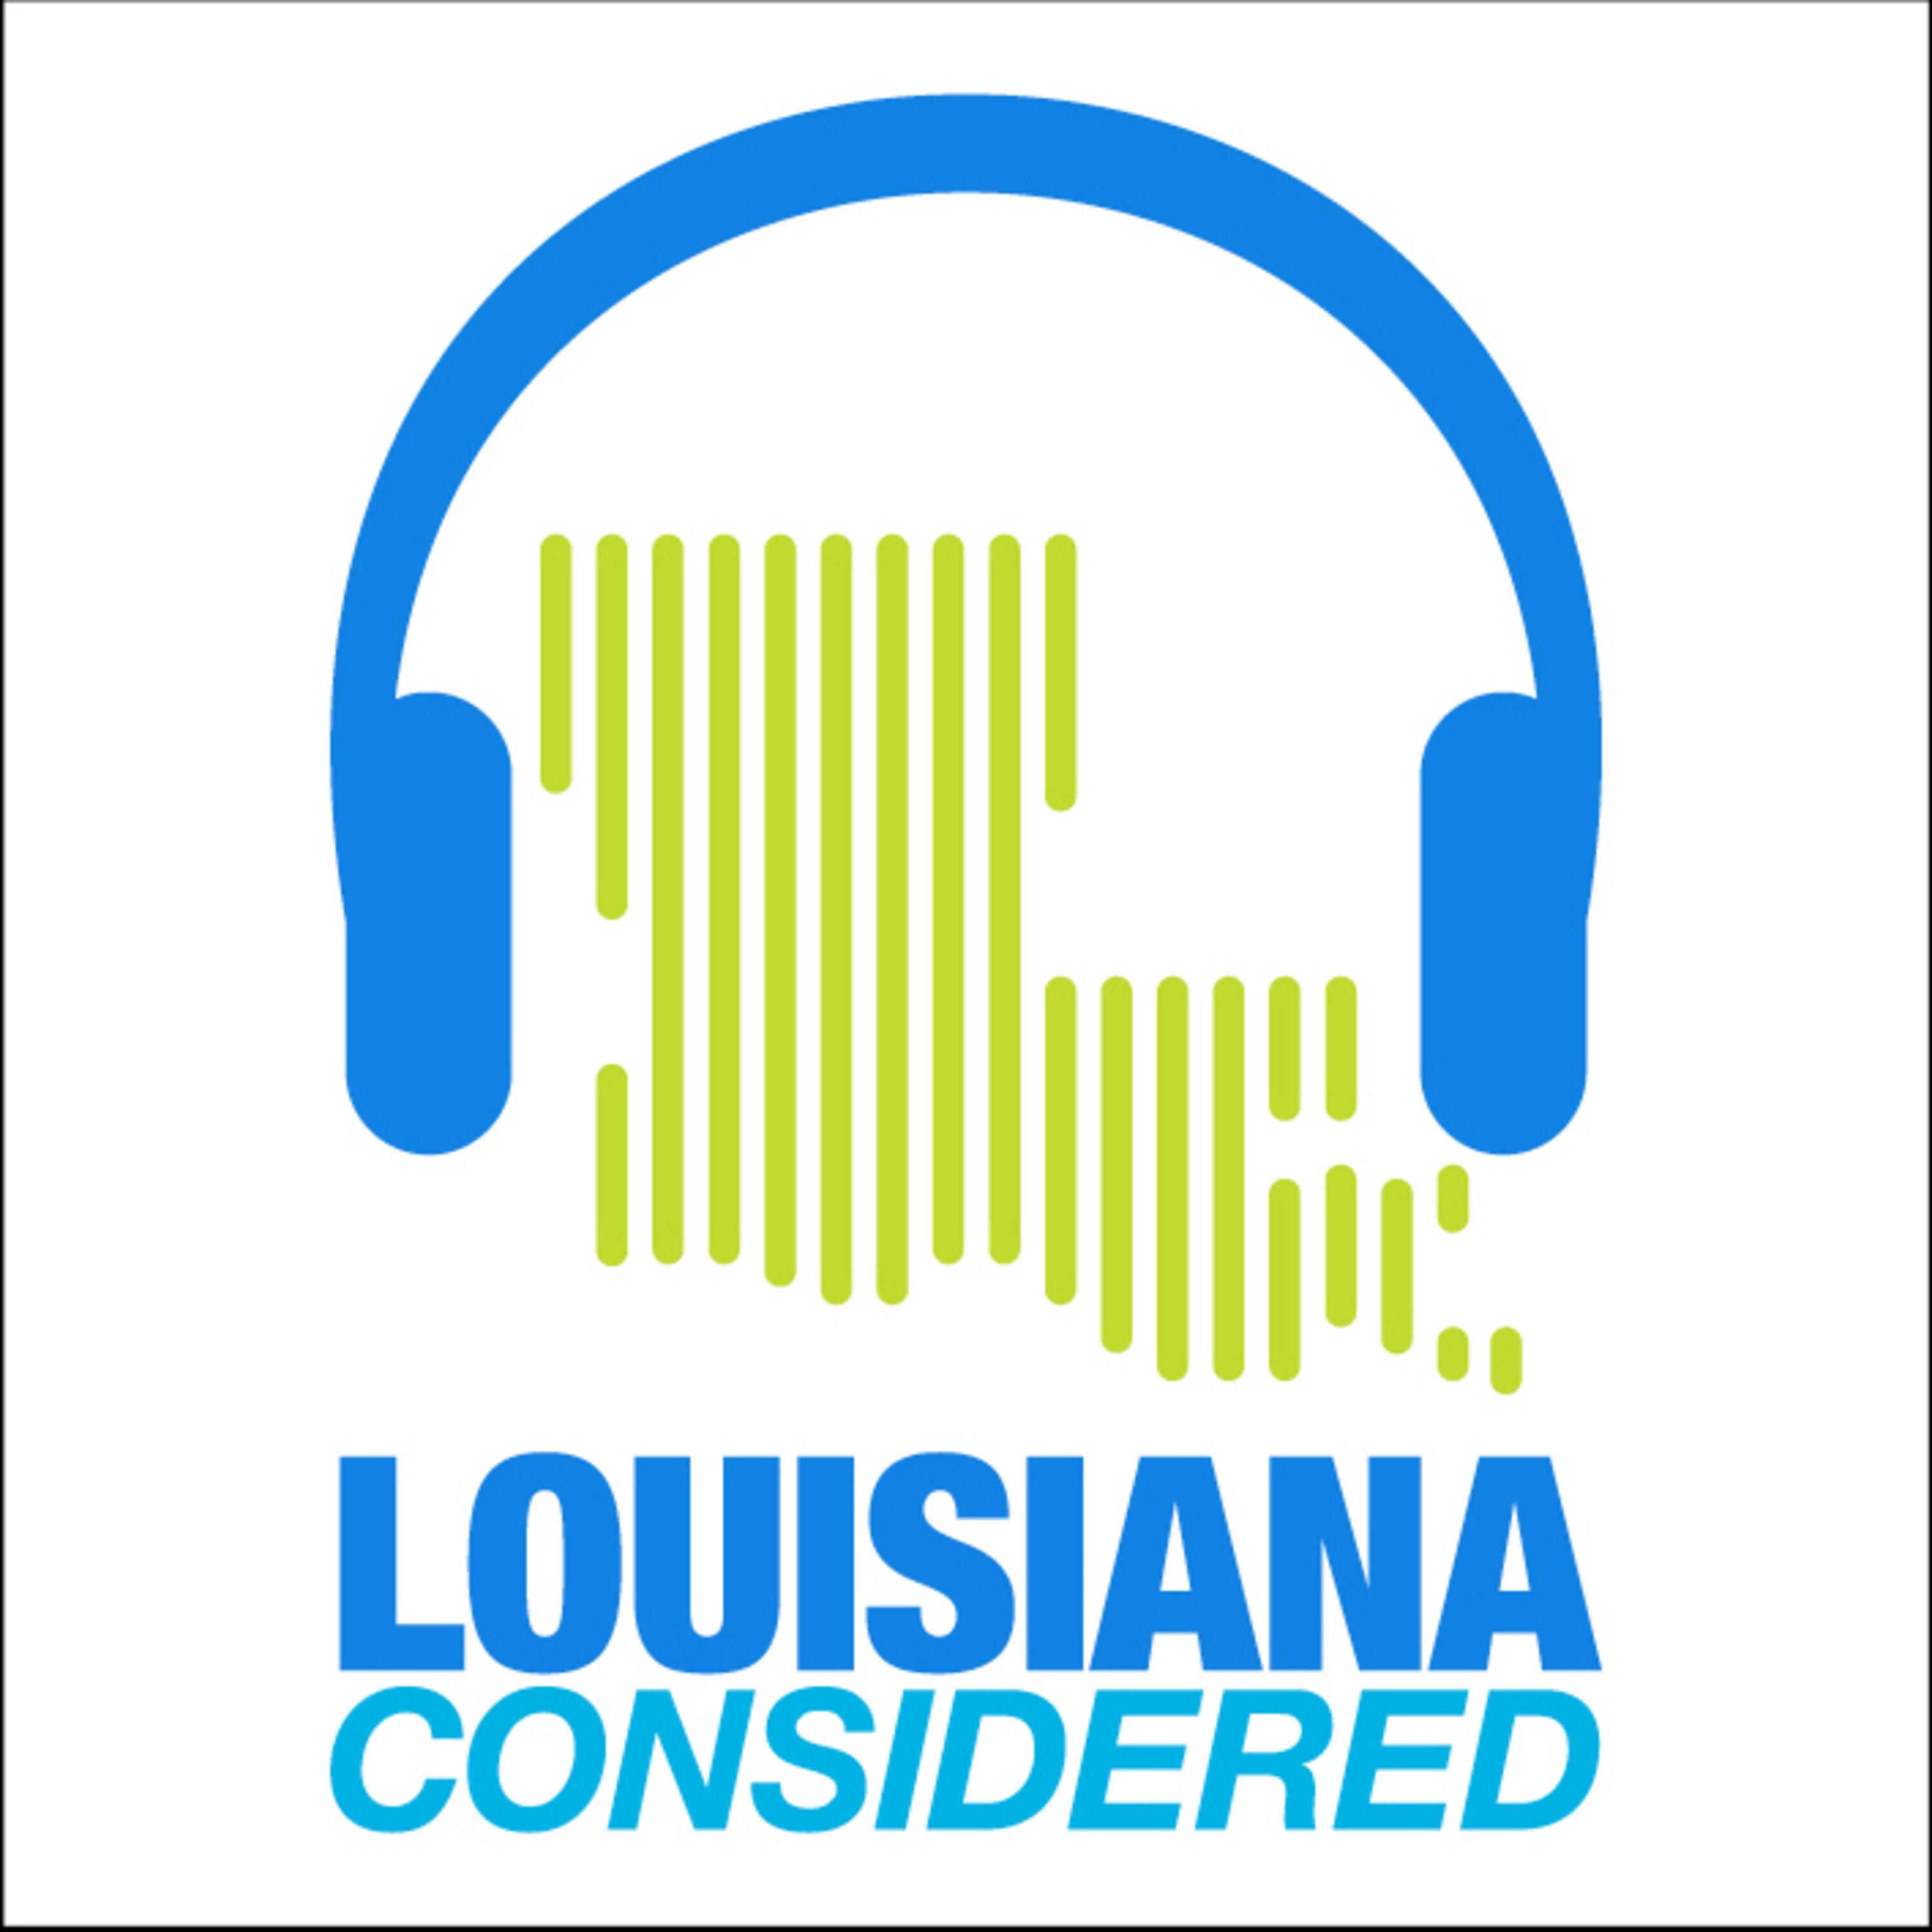 Thumbnail for "Louisiana Considered: Dr. Joseph Kanter on lifting Louisiana’s mask mandate".